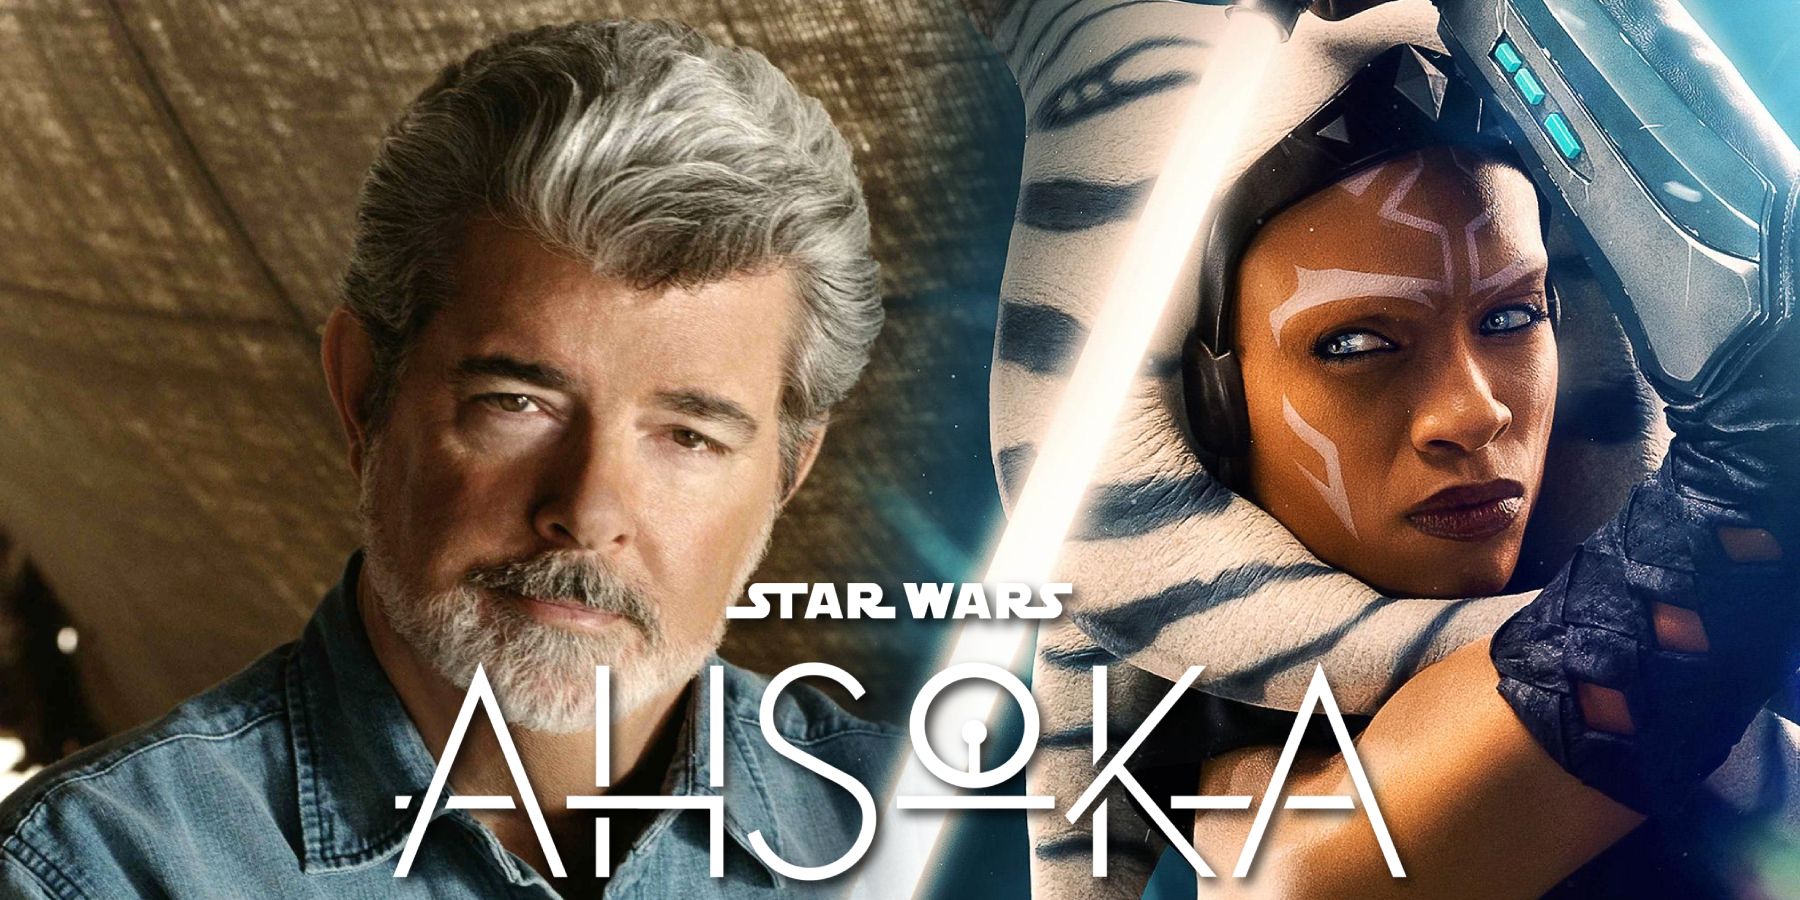 George Lucas in a split image next to Rosario Dawson as Ahsoka Tano from the Star Wars series Ahsoka